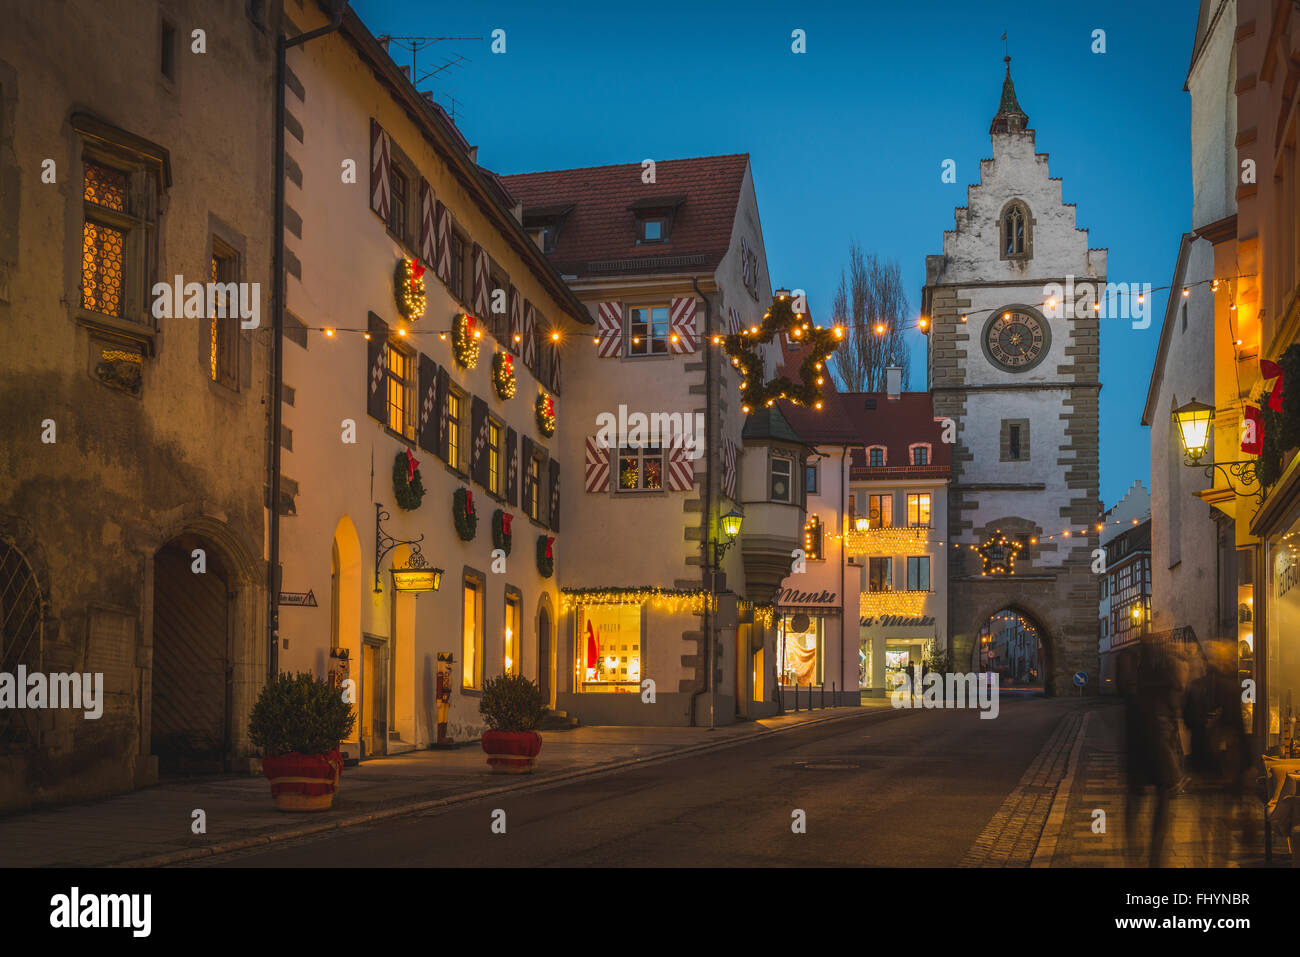 Germany, Ueberlingen, Christmas illumination in Franziskanerstrasse with Franziskanertor Stock Photo